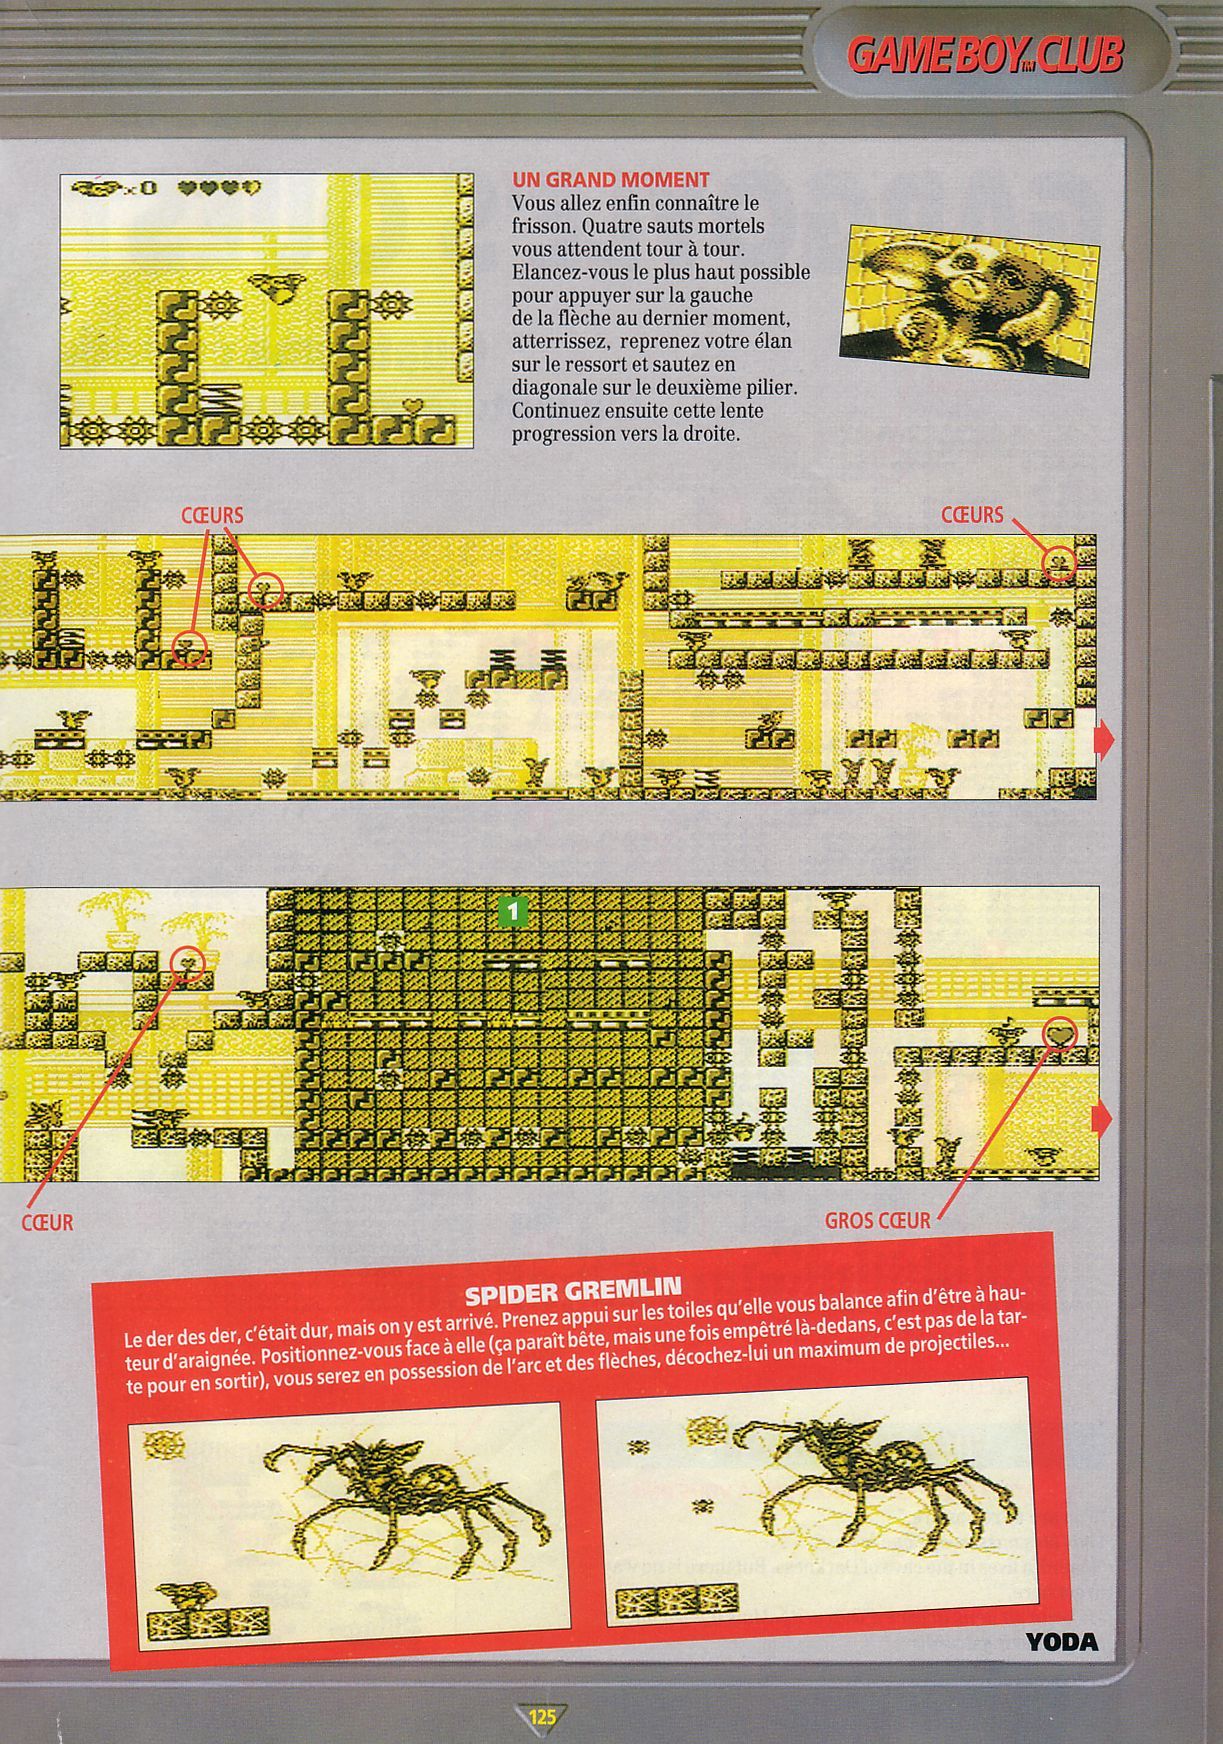 tests//813/Nintendo Player 007 - Page 125 (1992-11-12).jpg